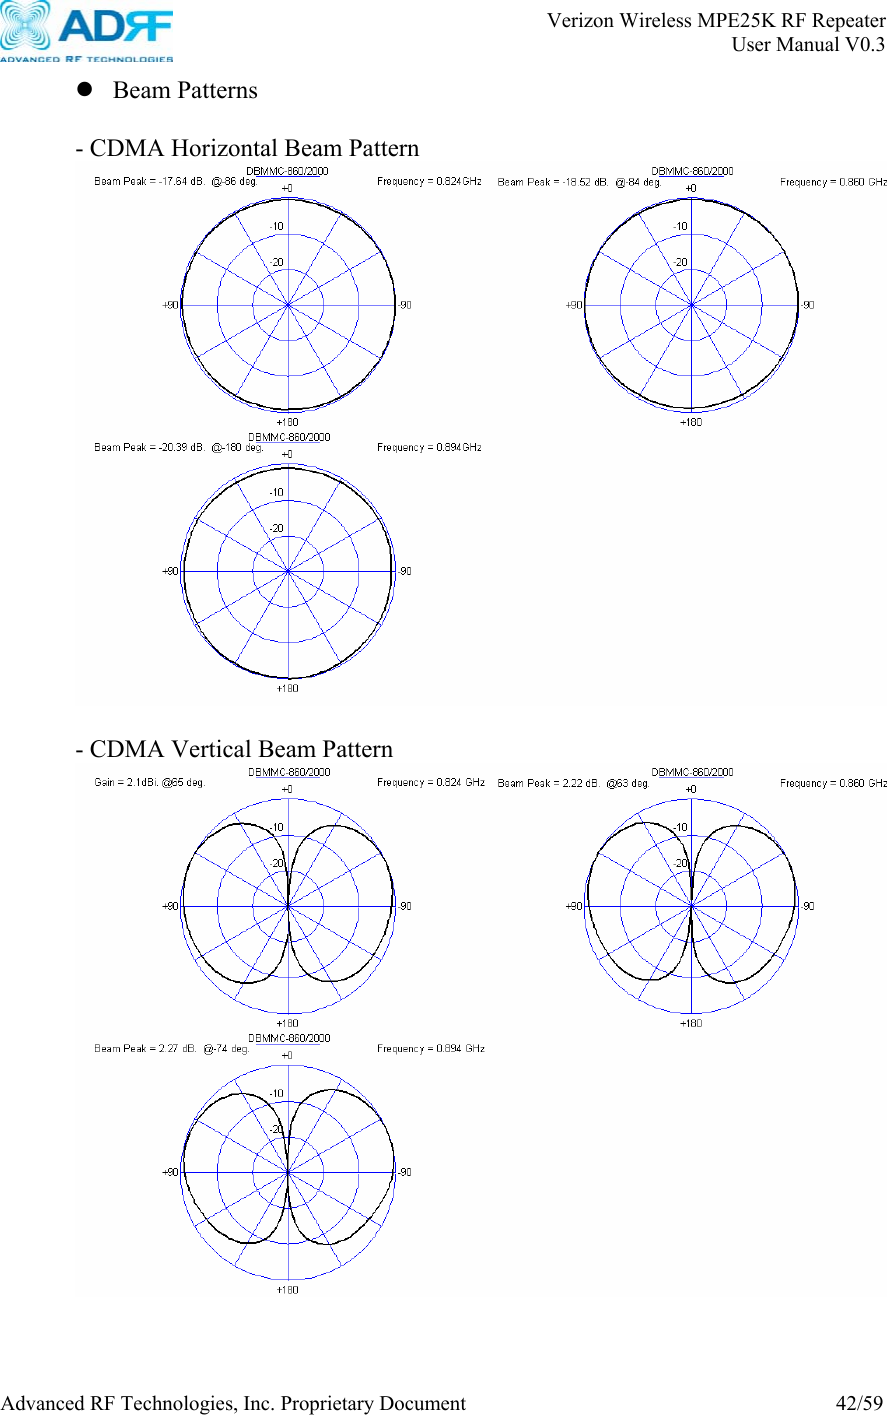       Verizon Wireless MPE25K RF Repeater   User Manual V0.3 Advanced RF Technologies, Inc. Proprietary Document  42/59 z Beam Patterns  - CDMA Horizontal Beam Pattern   - CDMA Vertical Beam Pattern  